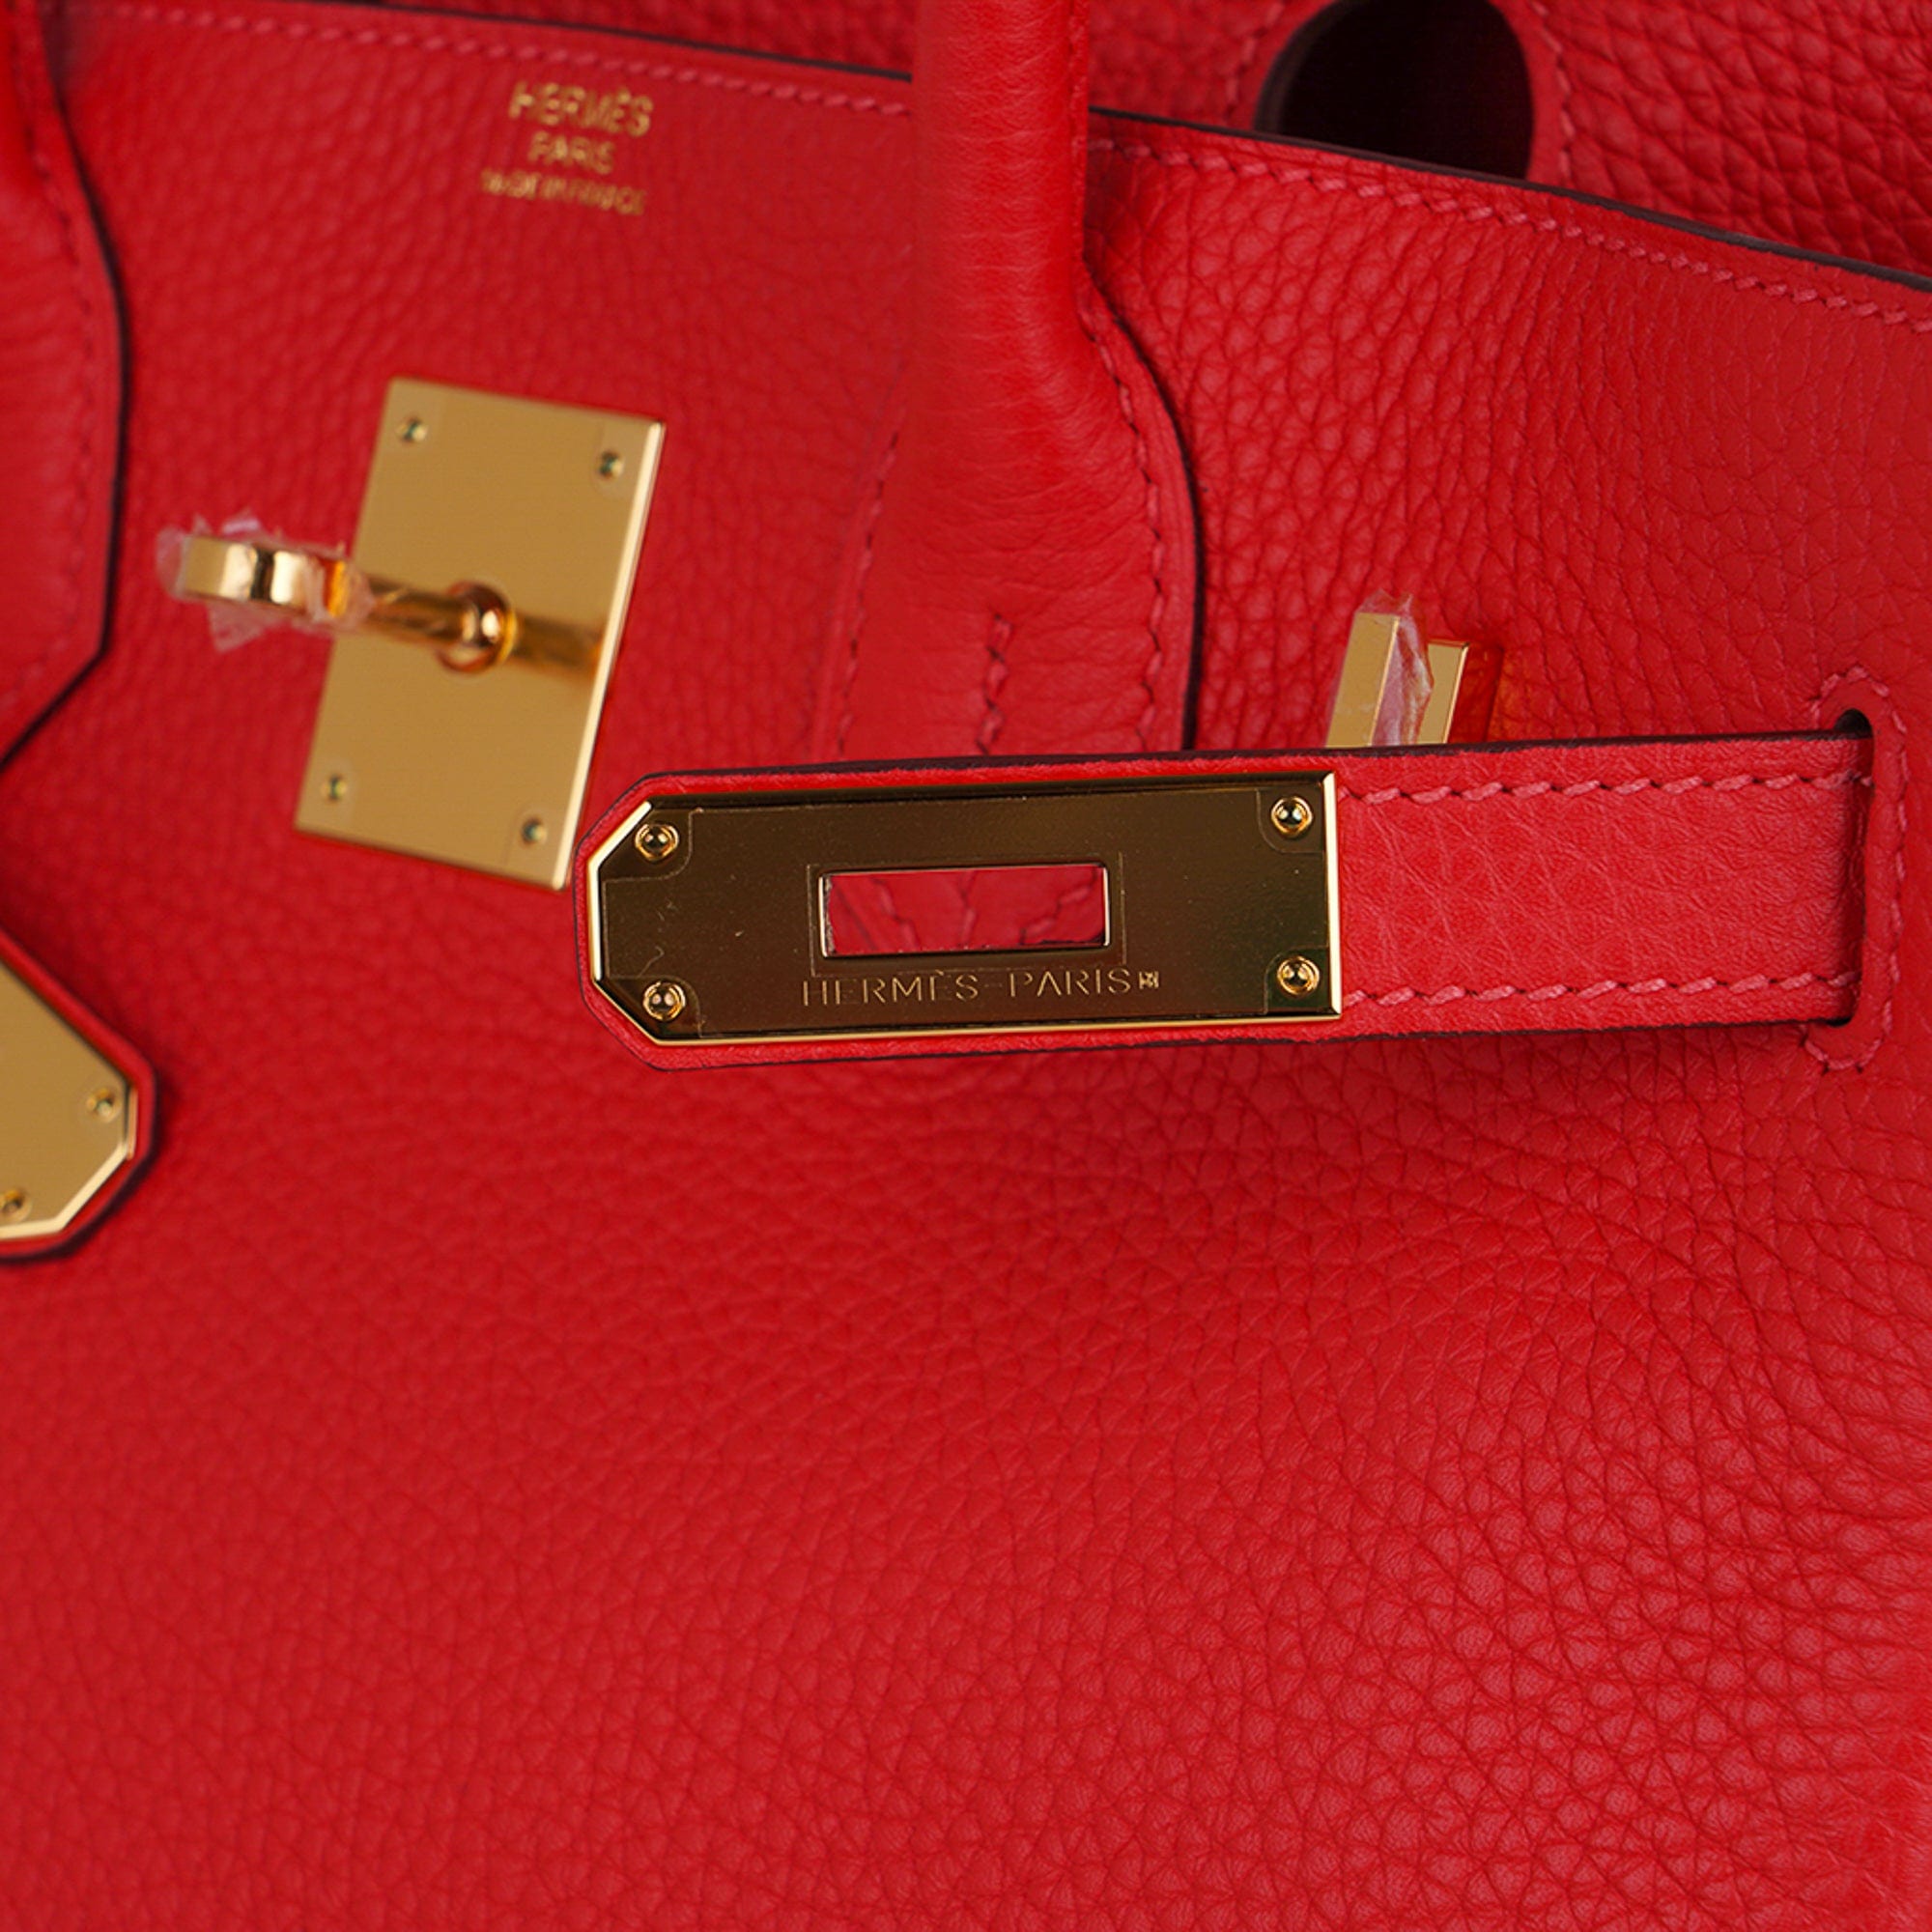 🐚 Hermès 25cm Birkin Capucine Togo Leather Gold Hardware 2021